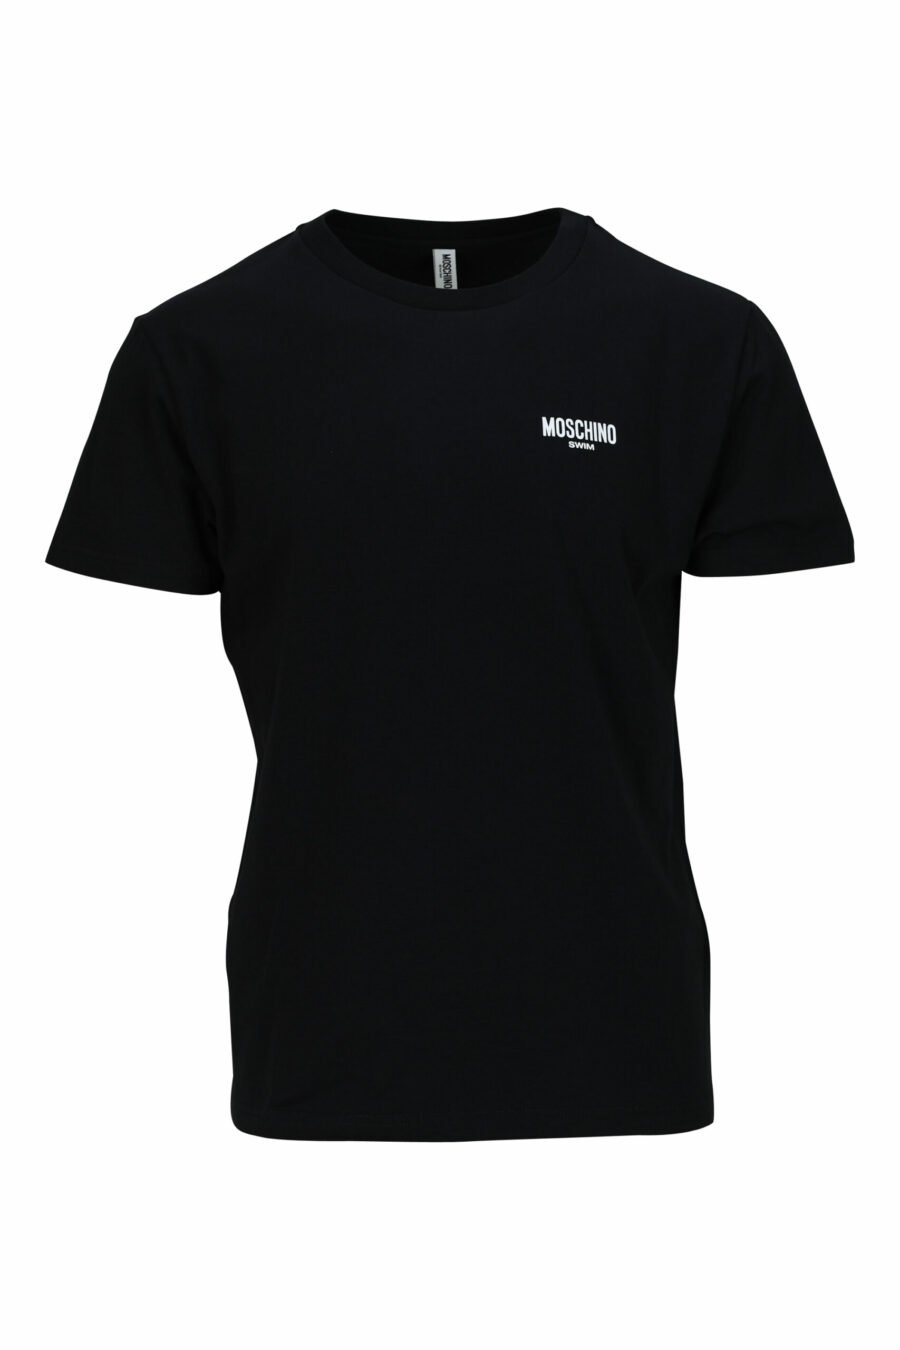 Camiseta negra con minilogo "swim" - 667113673530 scaled